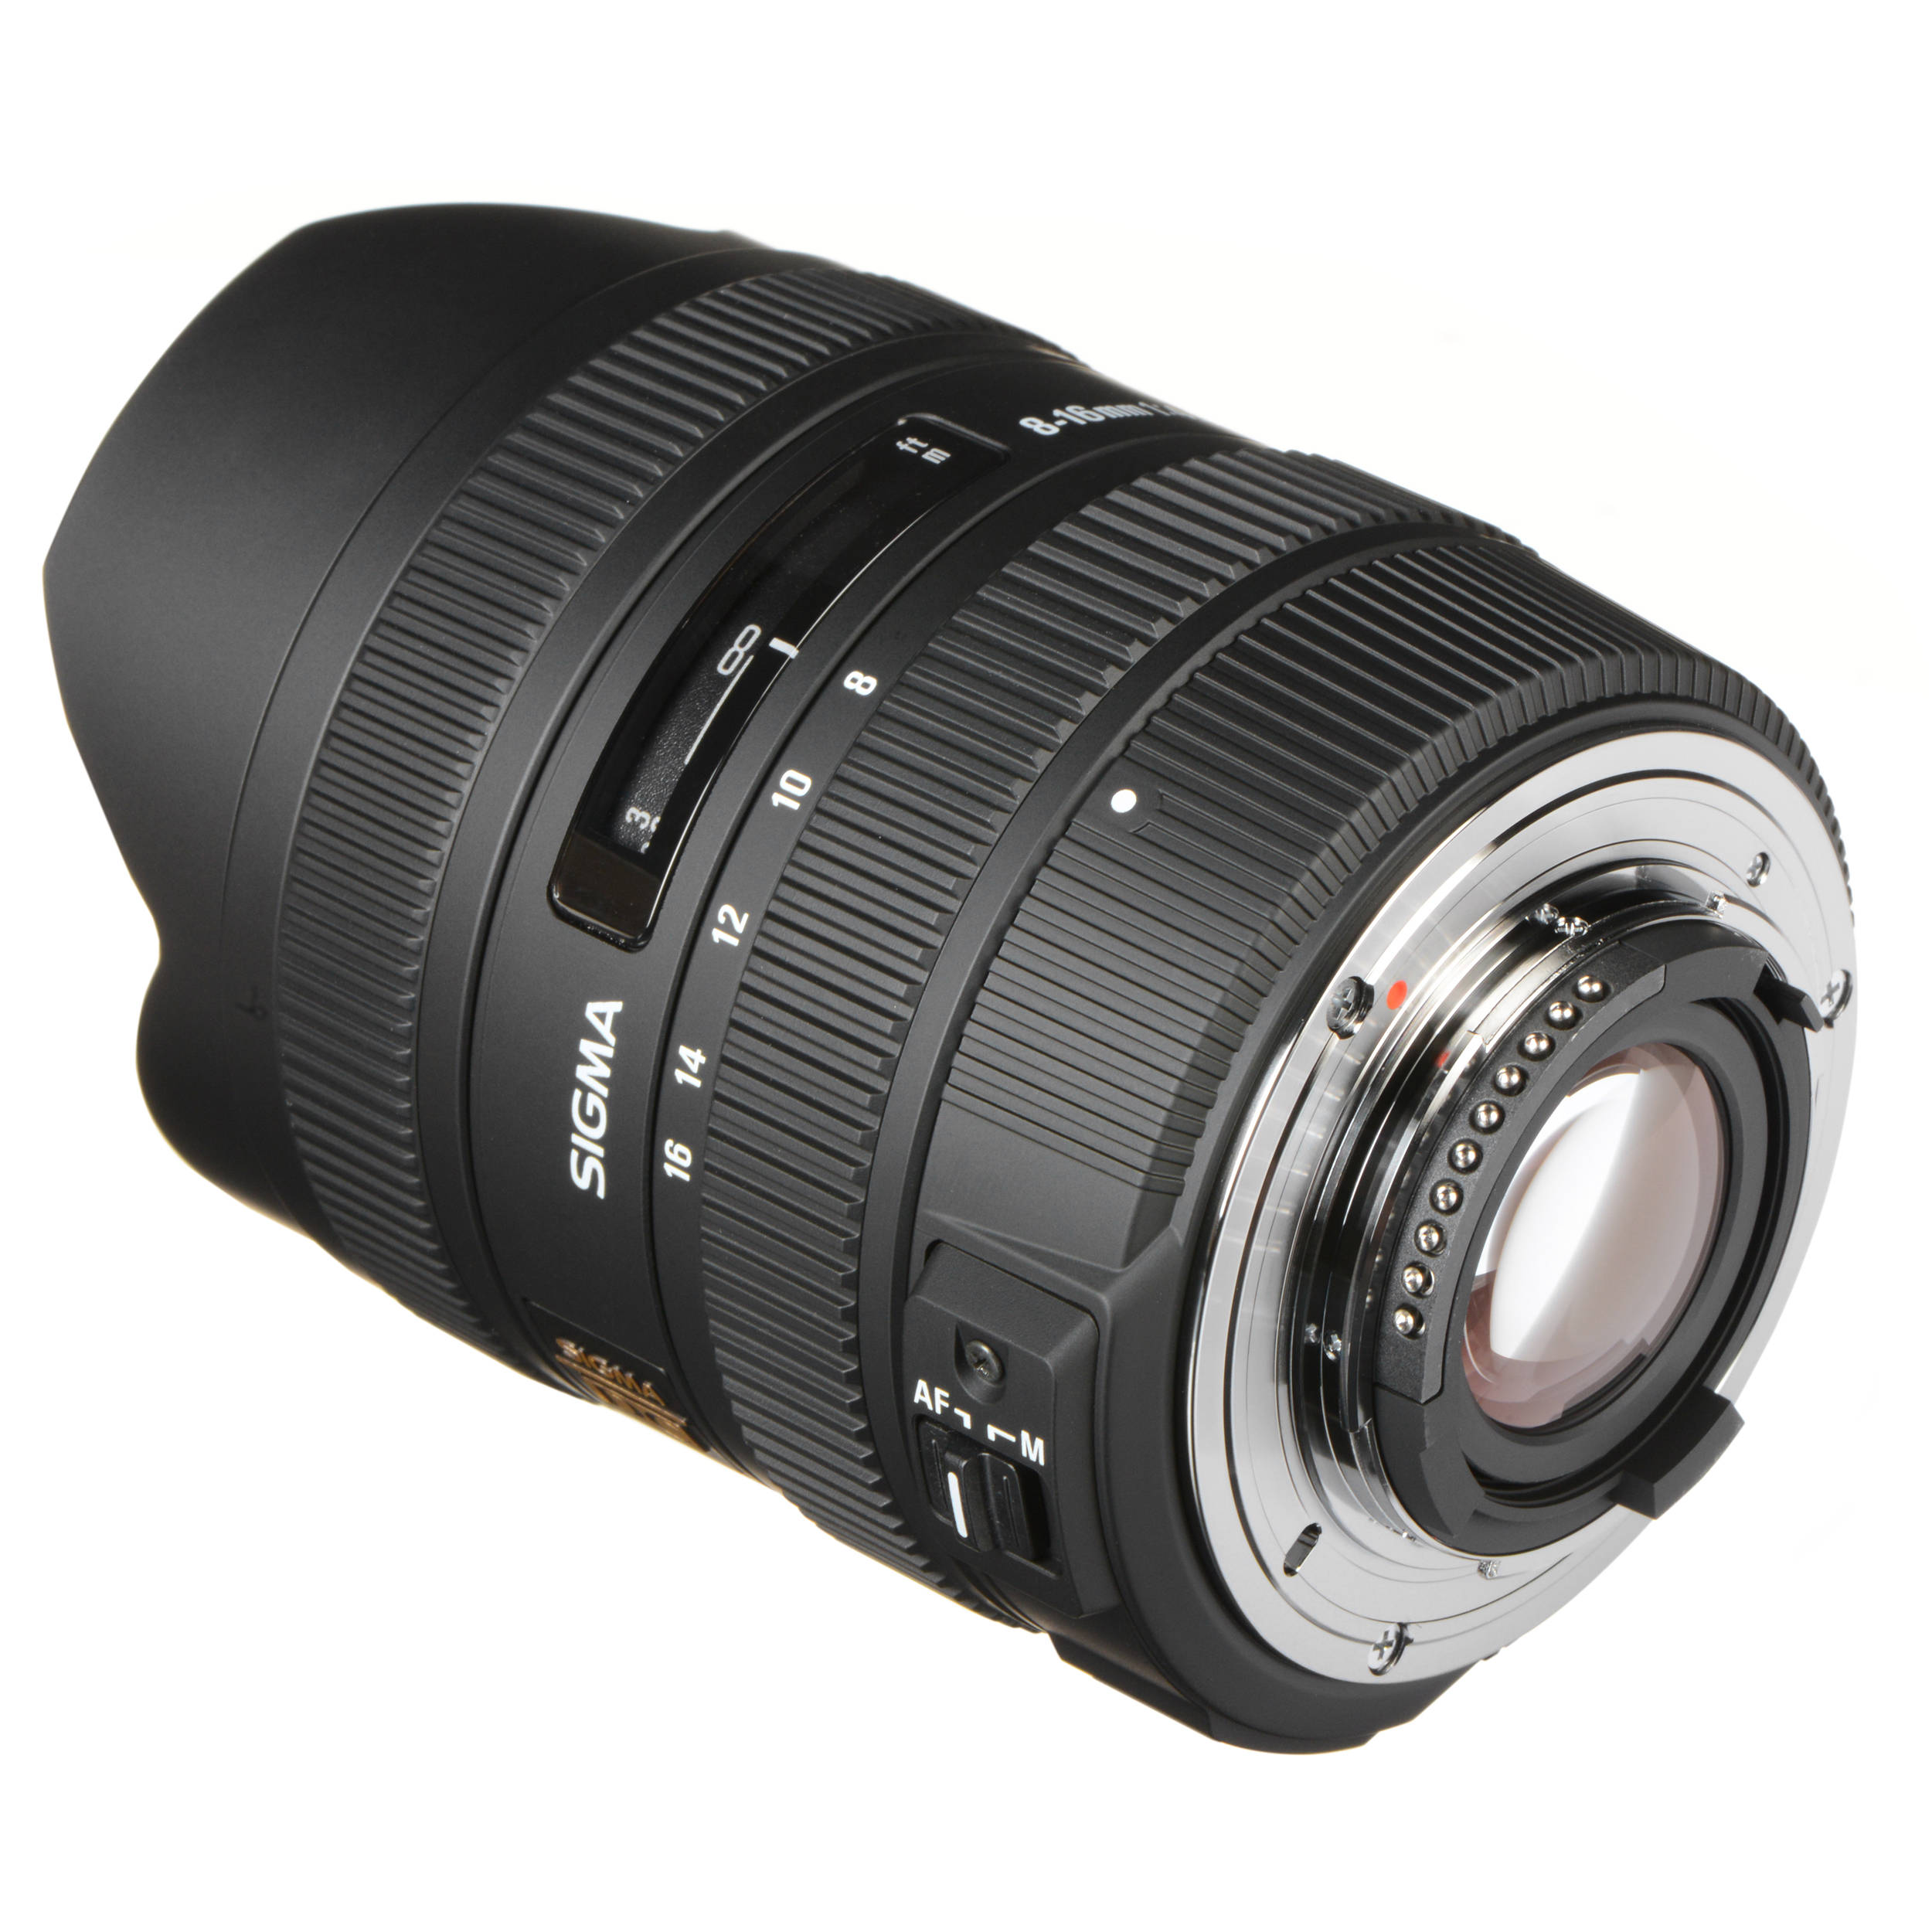 Sigma 8 16mm F 4 5 5 6 Dc Hsm Lens For Nikon F 3306 B H Photo